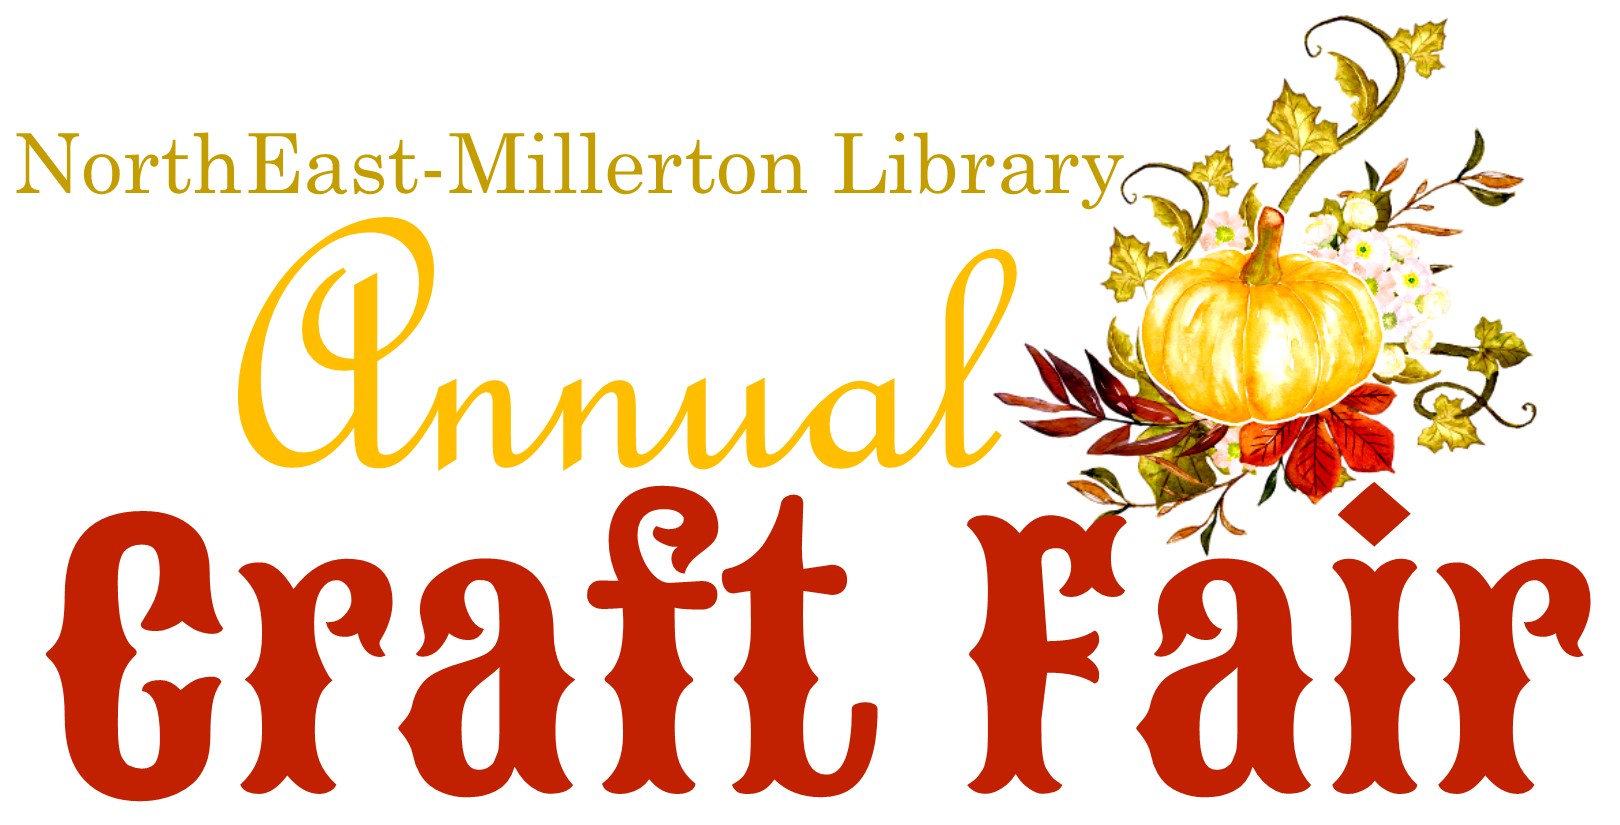 NorthEast-Millerton Library Craft Fair